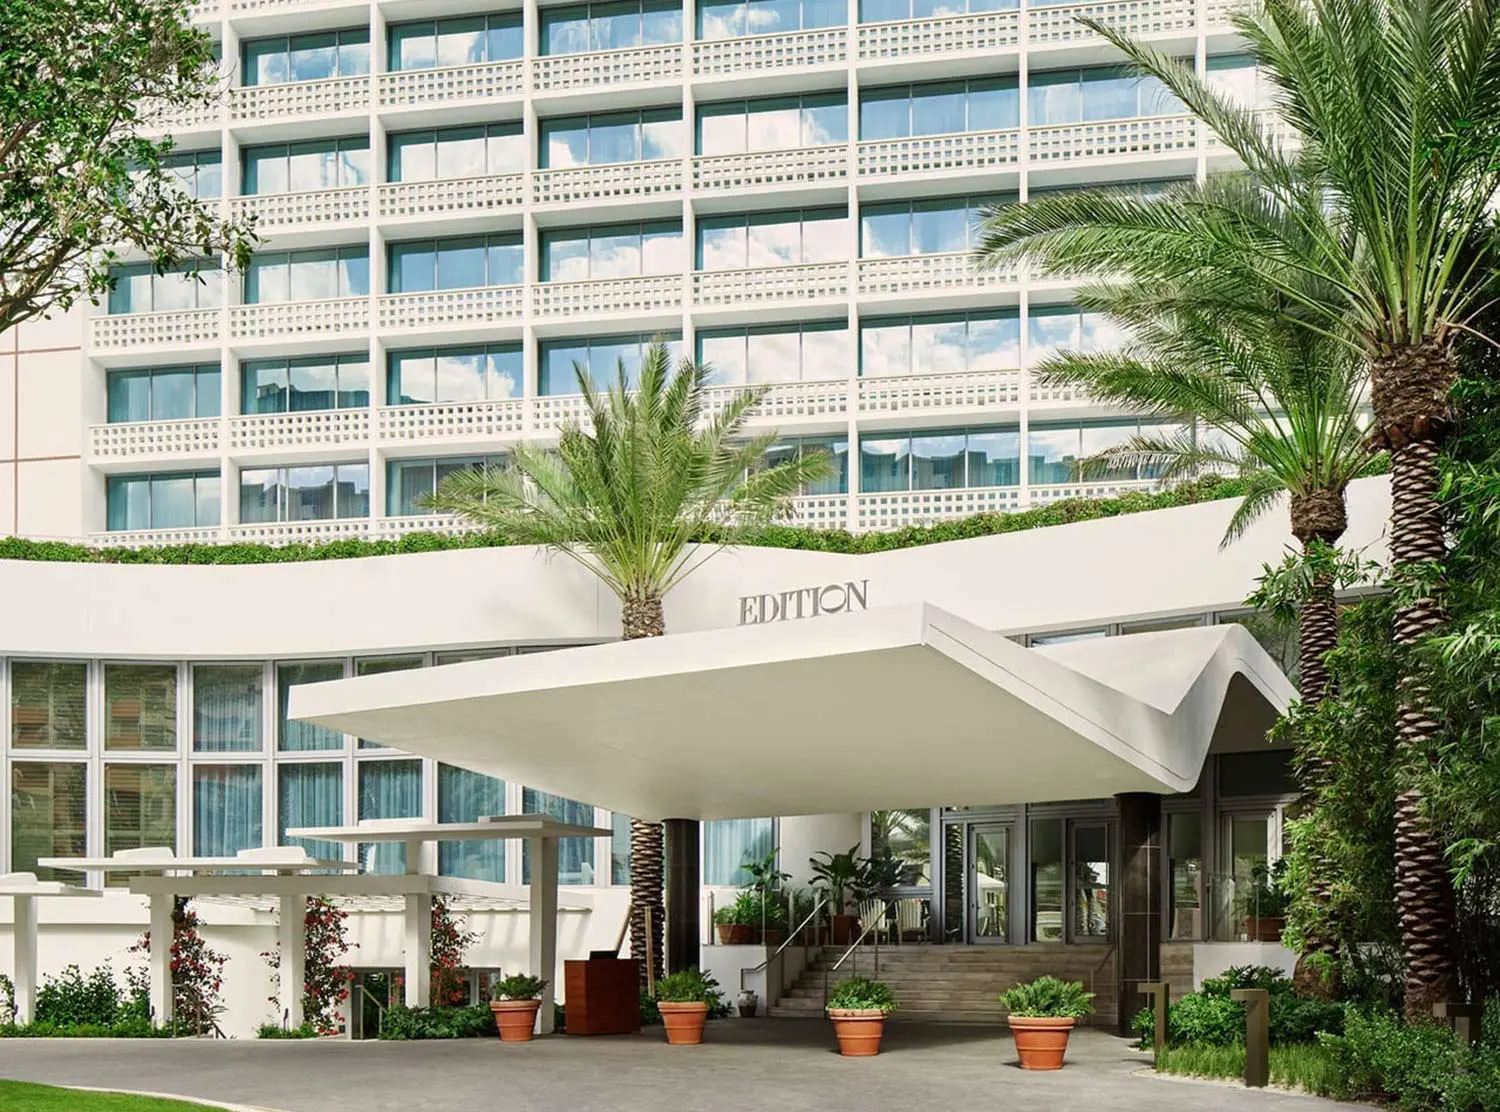 Full-on beach-meets-urban resort at the Miami Beach EDITION